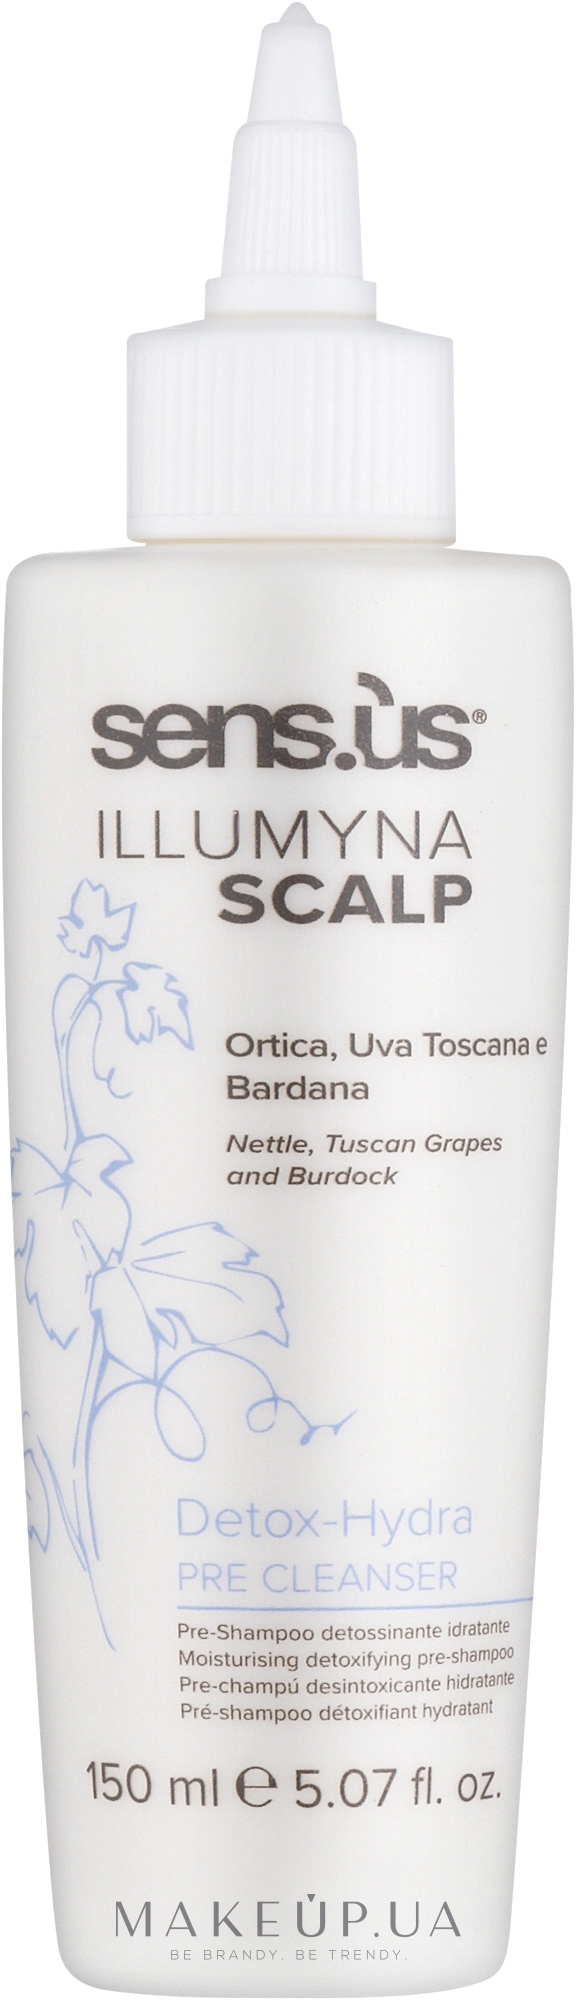 Детоксифицирующий увлажняющий шампунь - Sensus Illumyna Scalp Detox-Hydra Pre Cleanser — фото 150ml